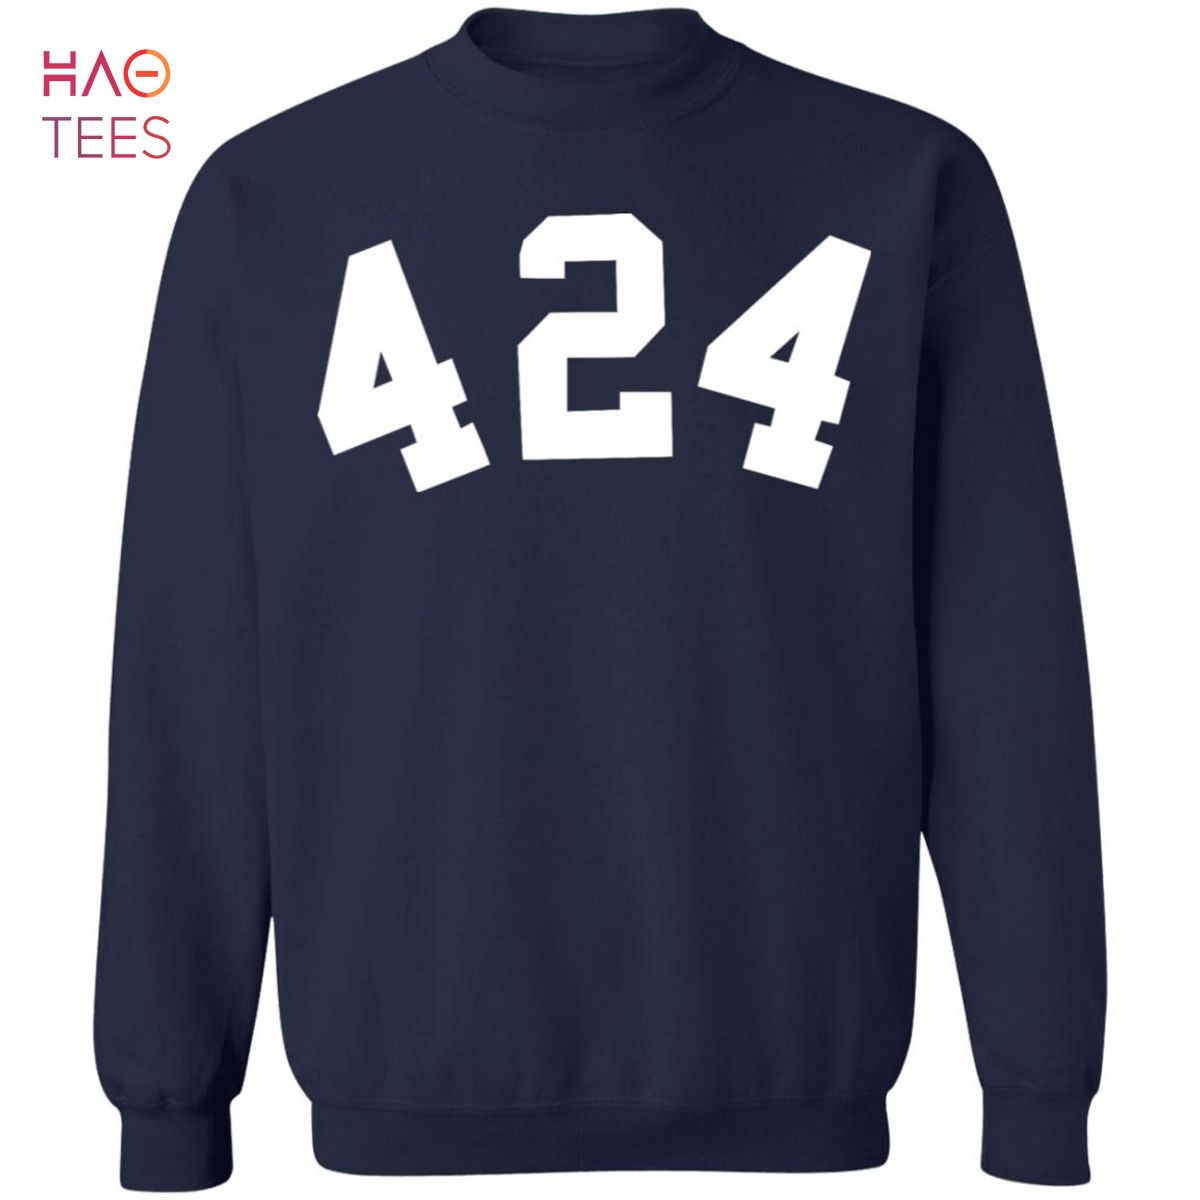 BEST 424 Sweater